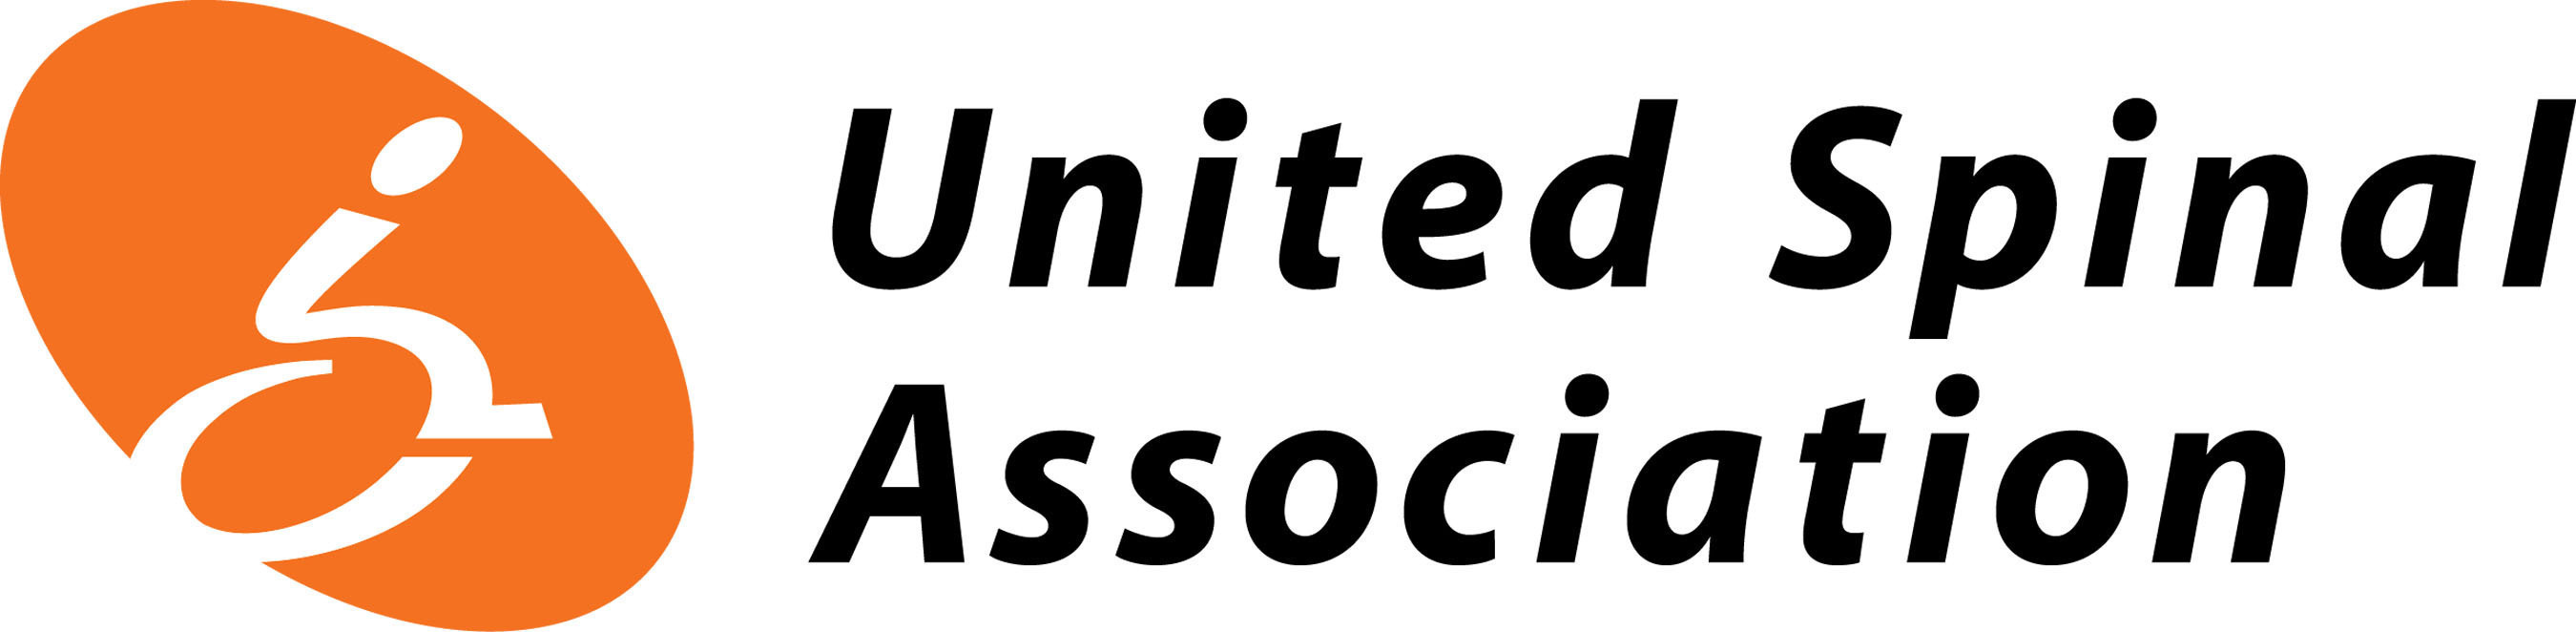 United Spinal Association.